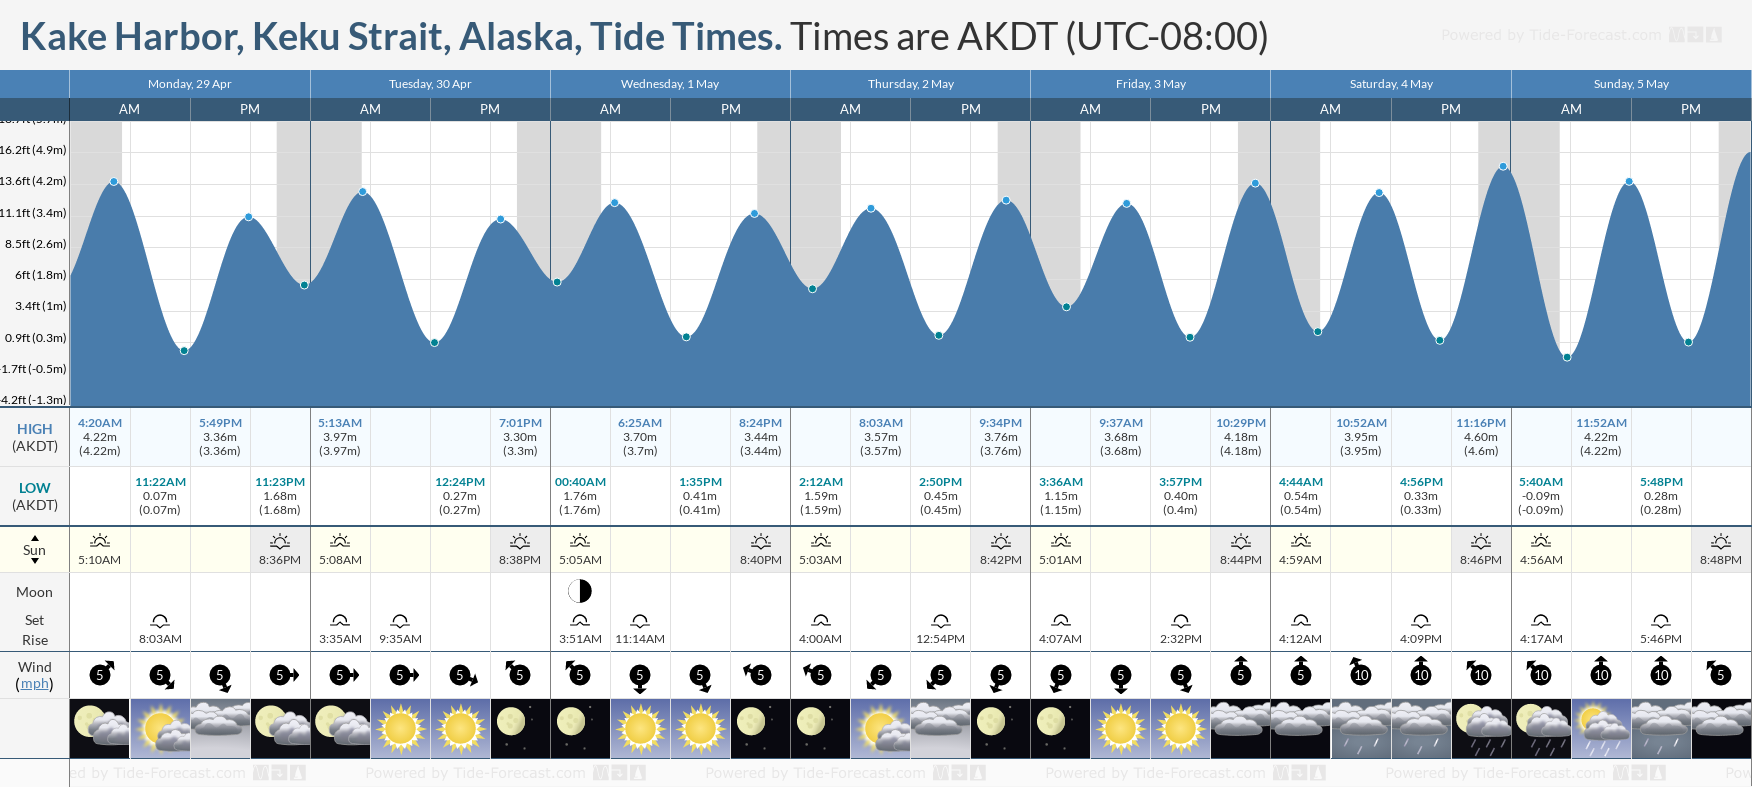 Kake Harbor, Keku Strait, Alaska Tide Chart including high and low tide times for the next 7 days